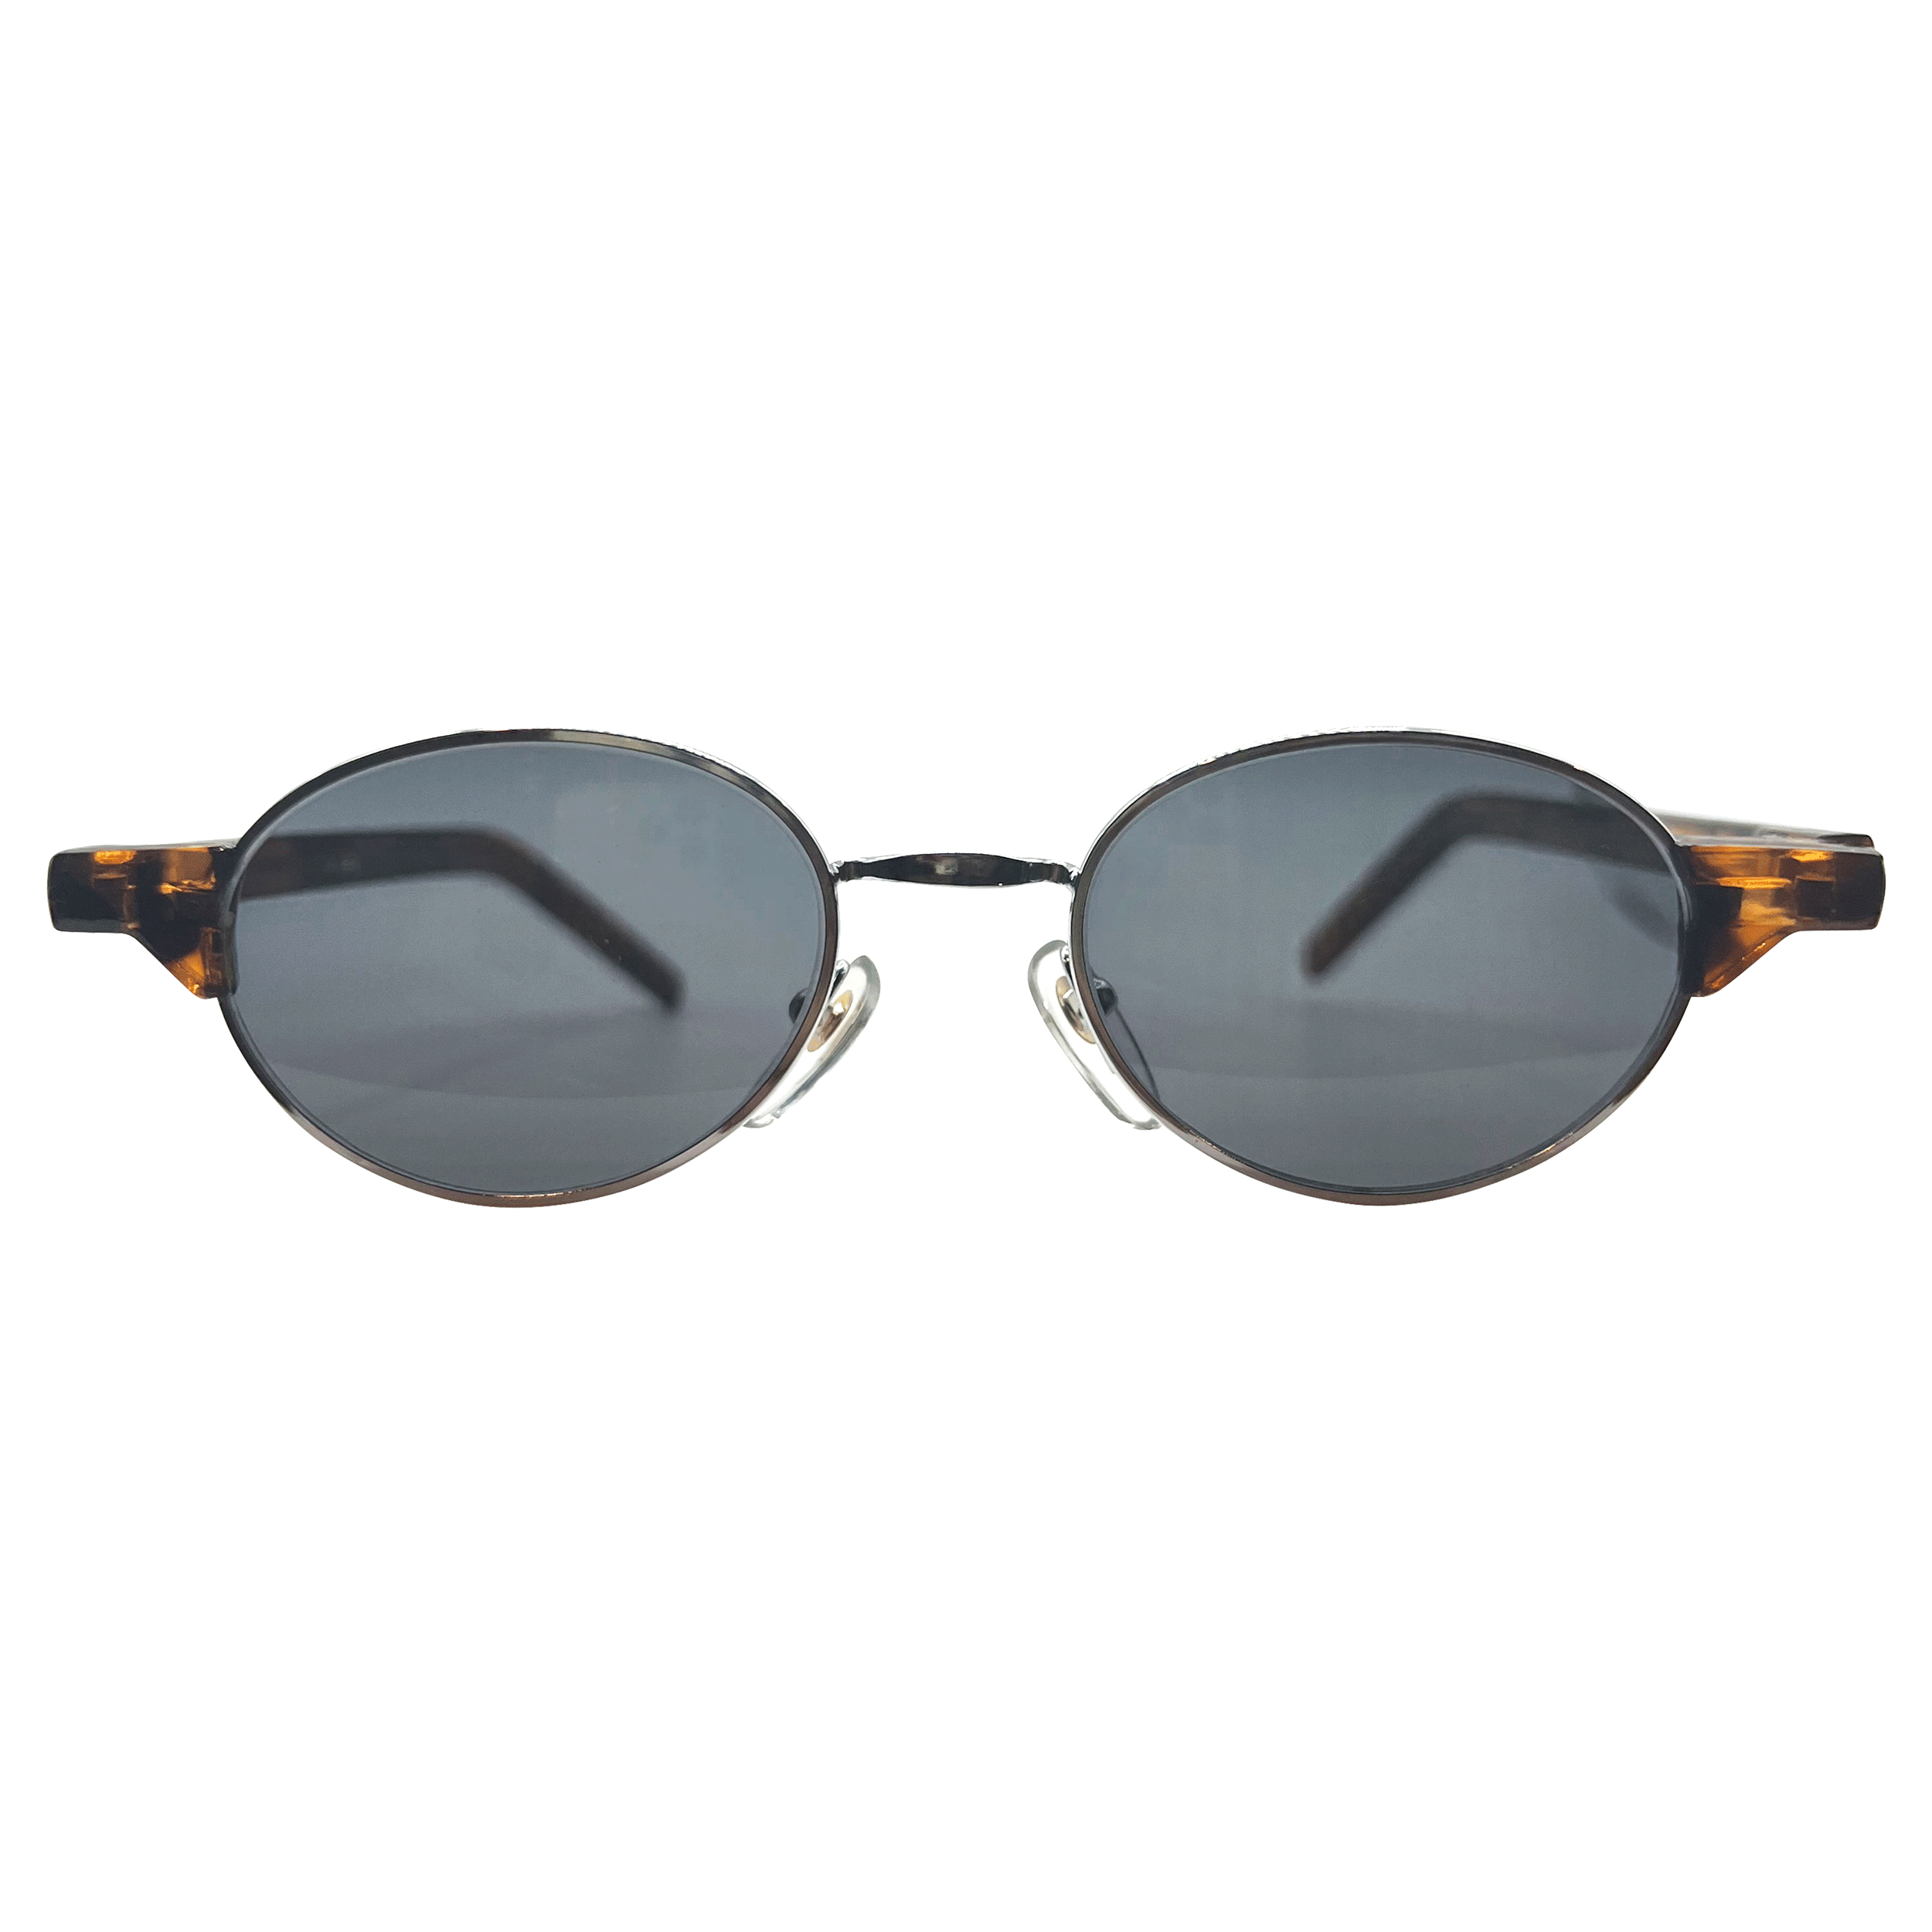 CESSNA Tortoise/Silver/Super Dark Oval Sunglasses